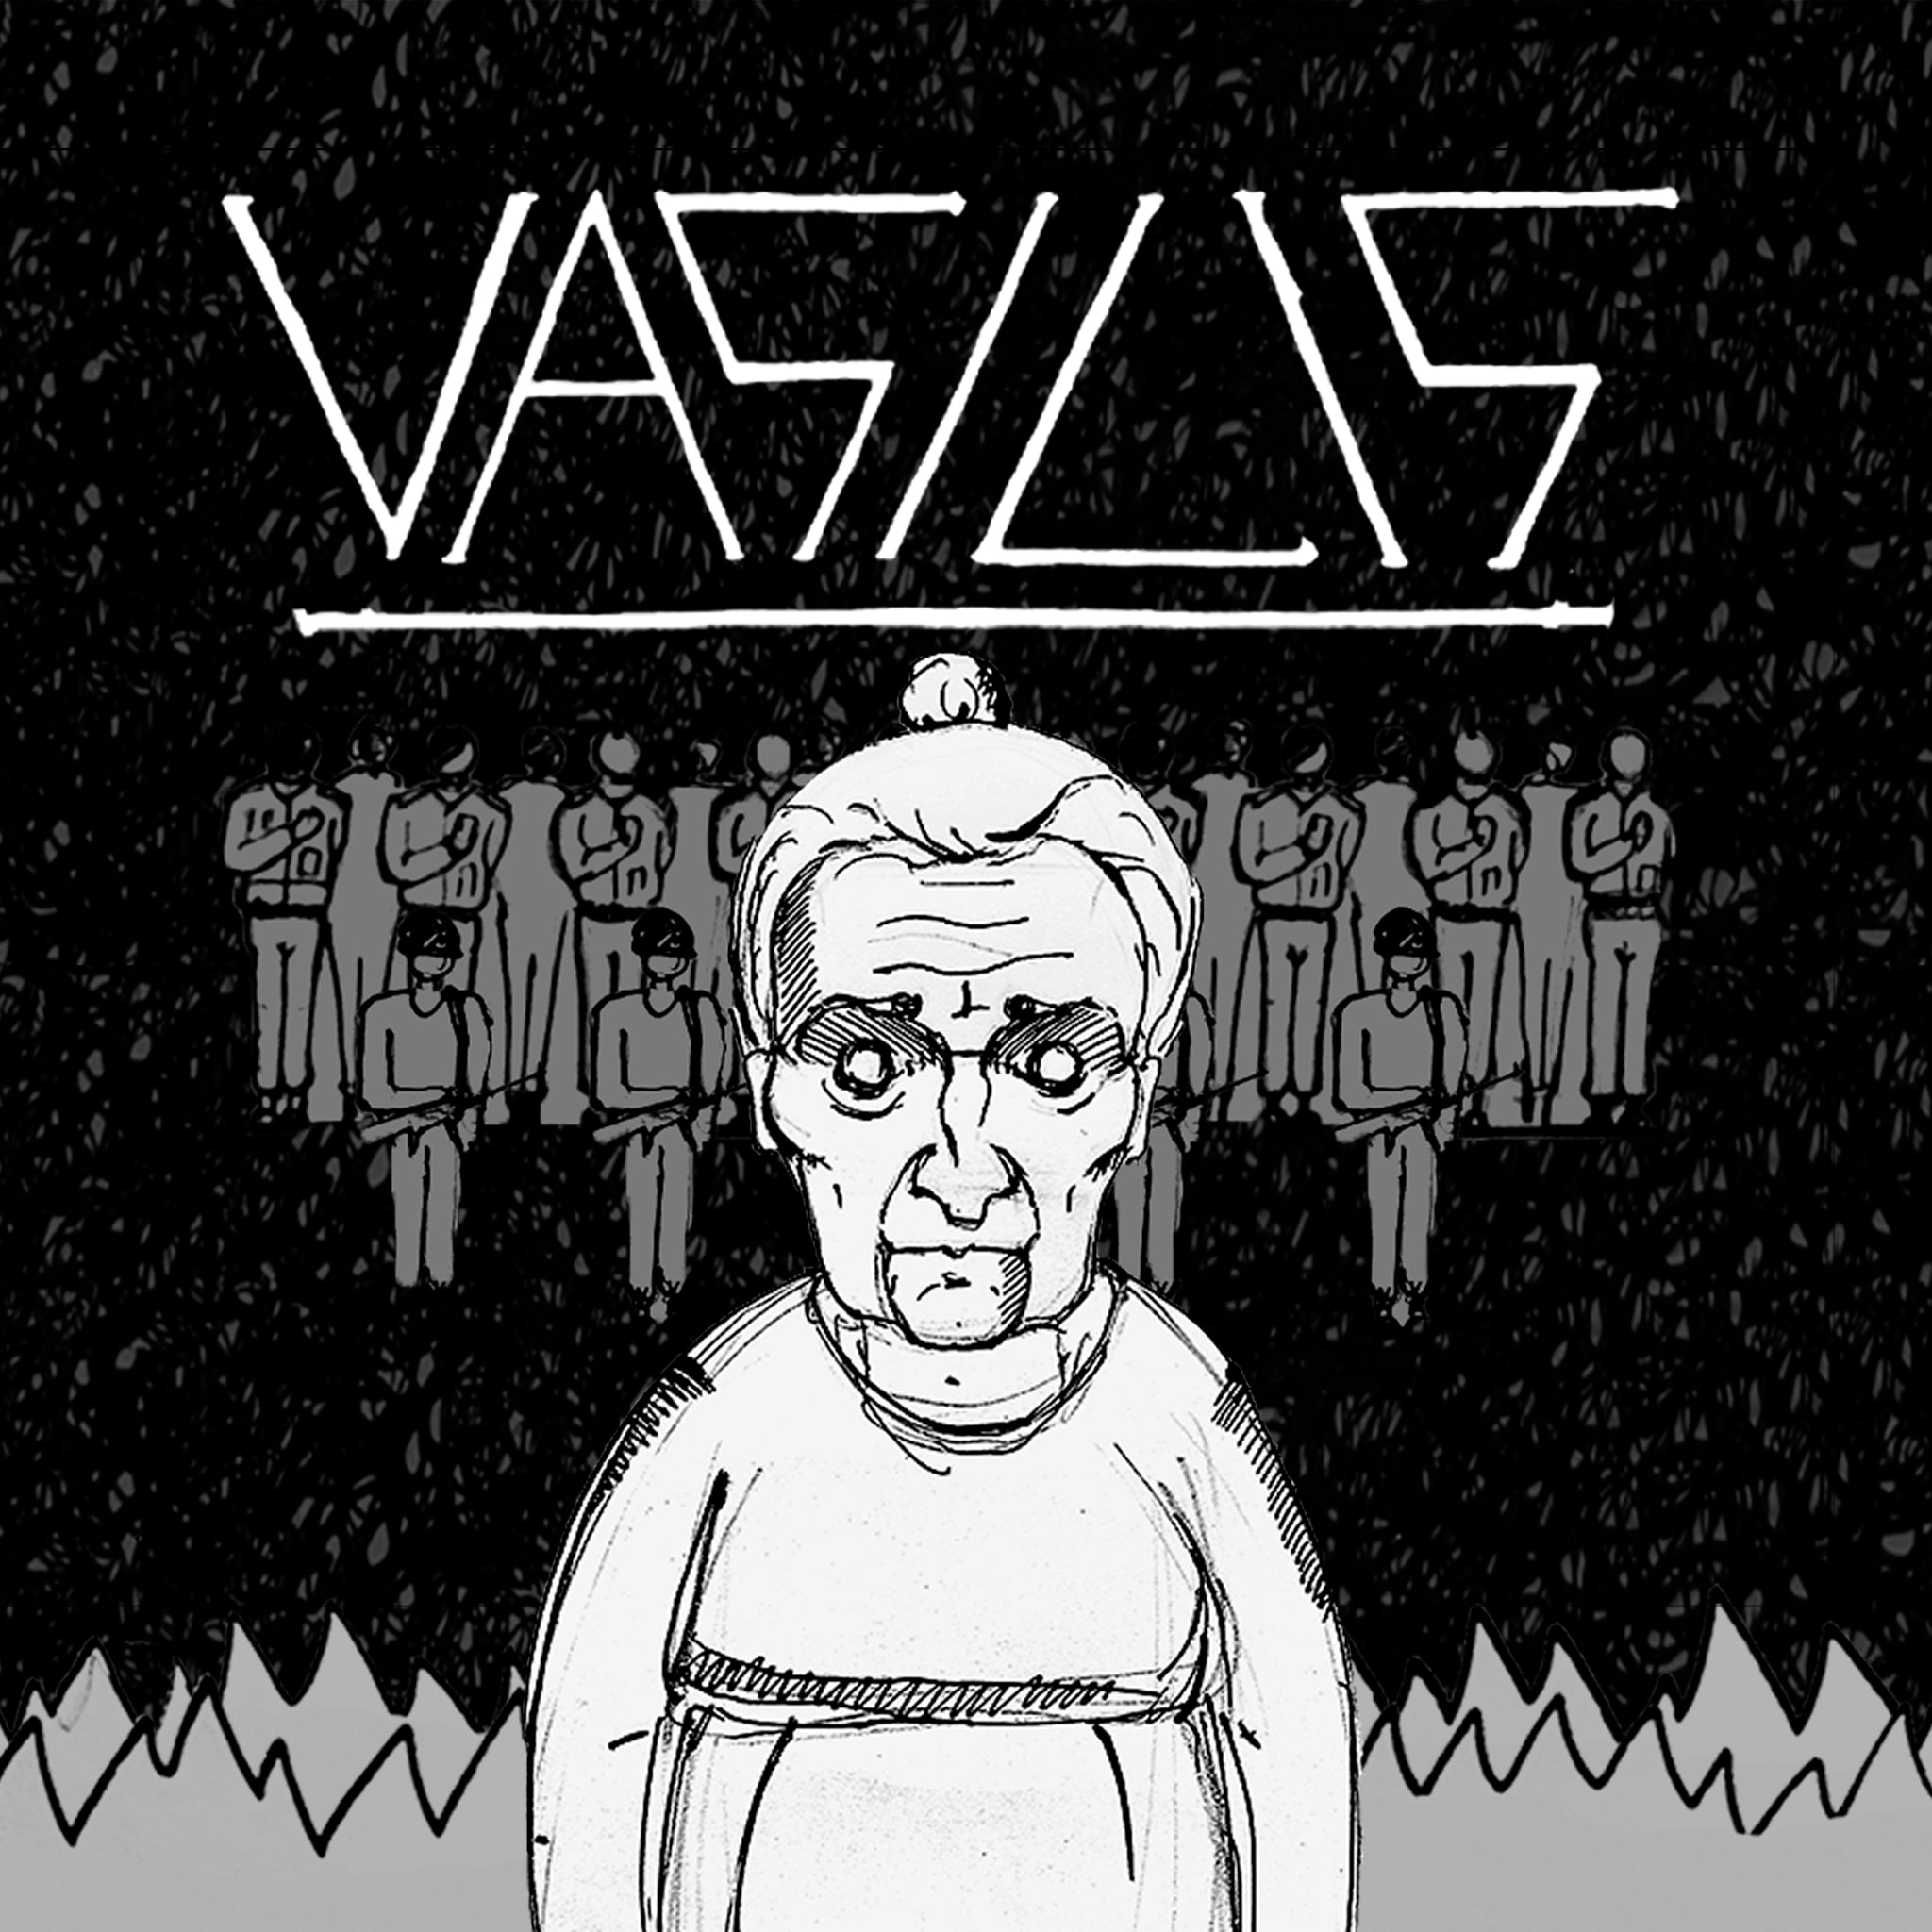 Vasilis